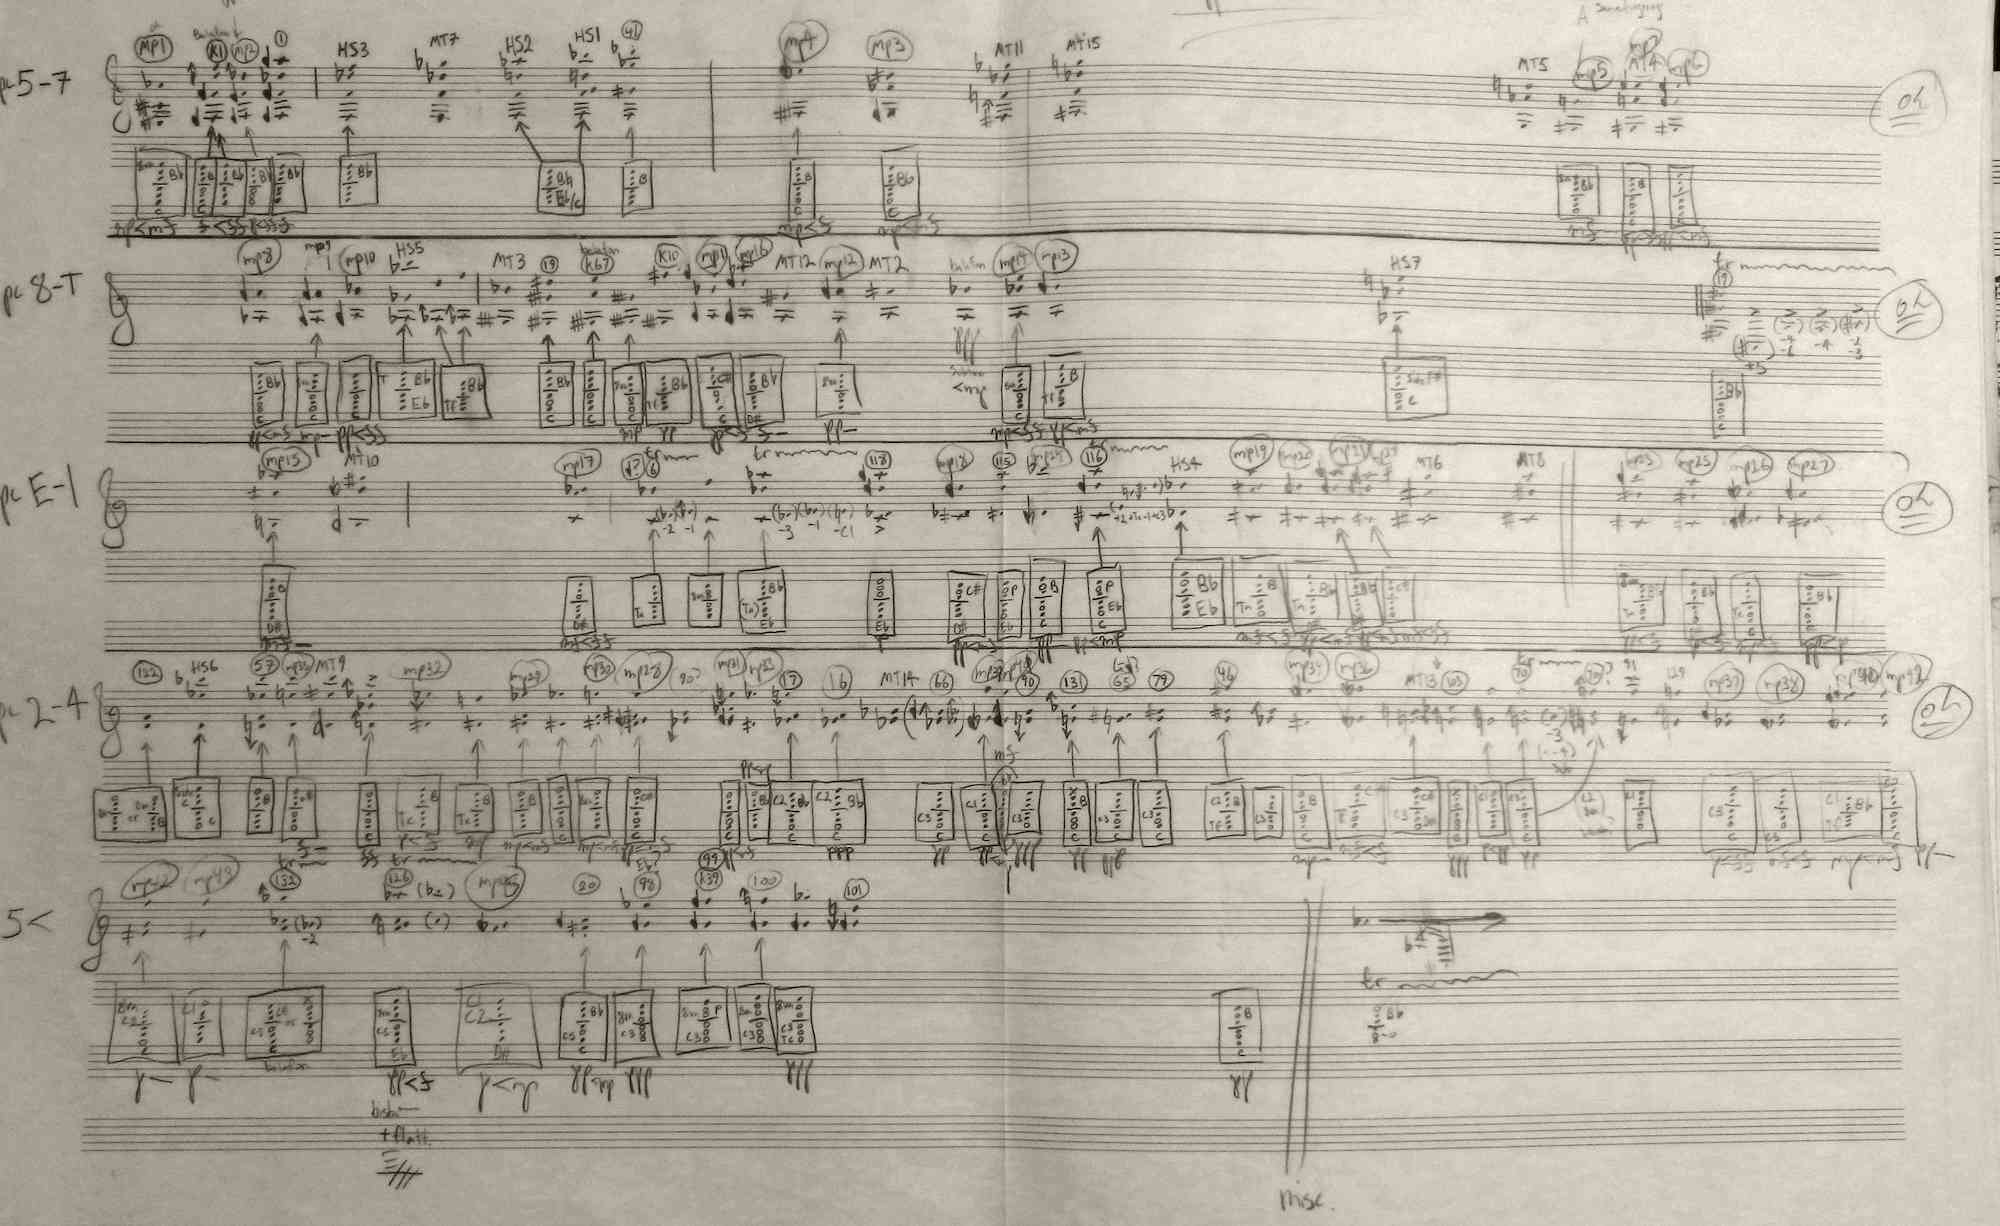 2012-doublethink-sketches-multiphonic-voice-leading-chart-manuscript